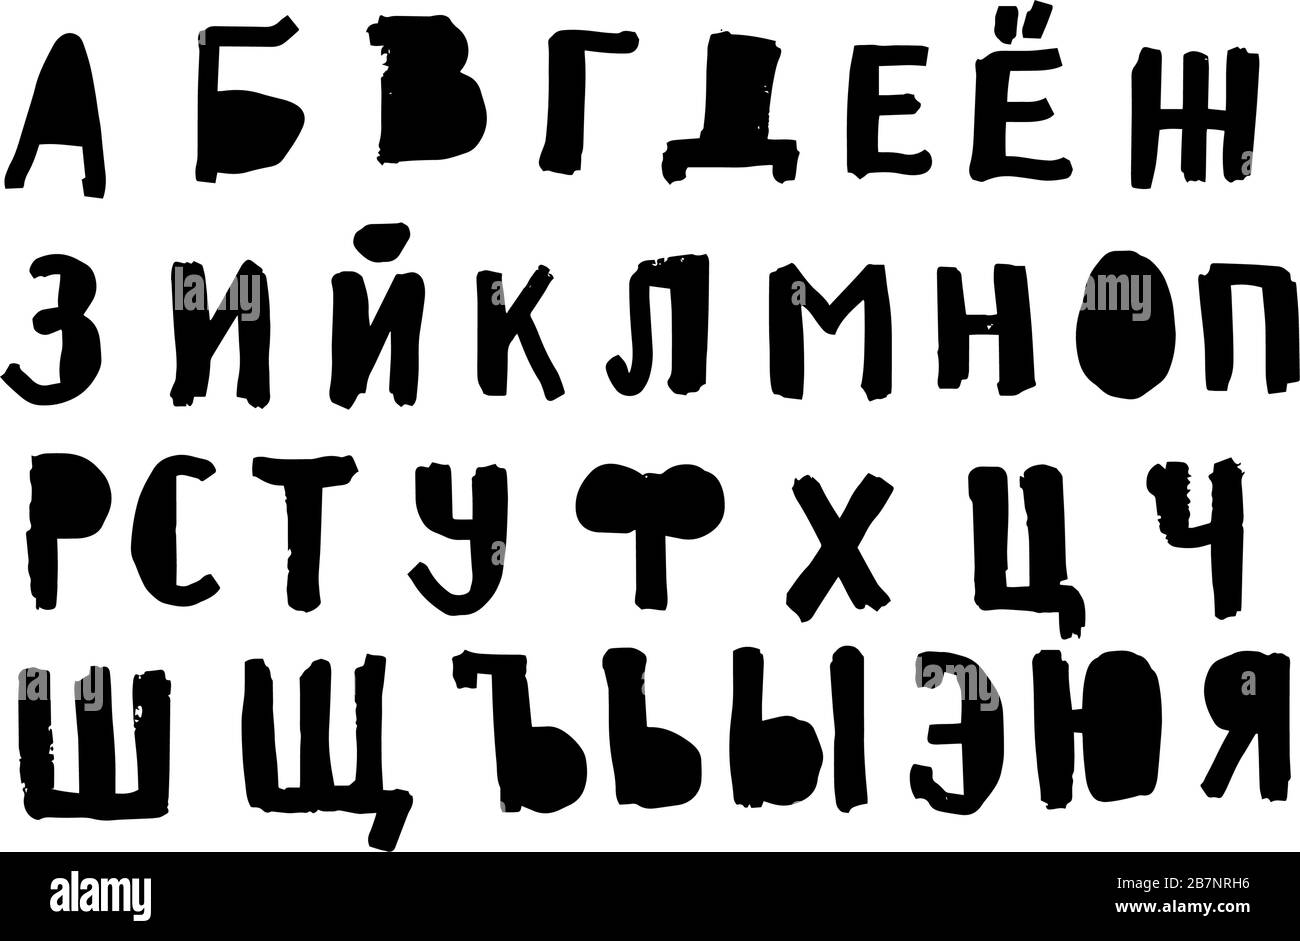 The Russian Alphabet Lore! [Demo!] 